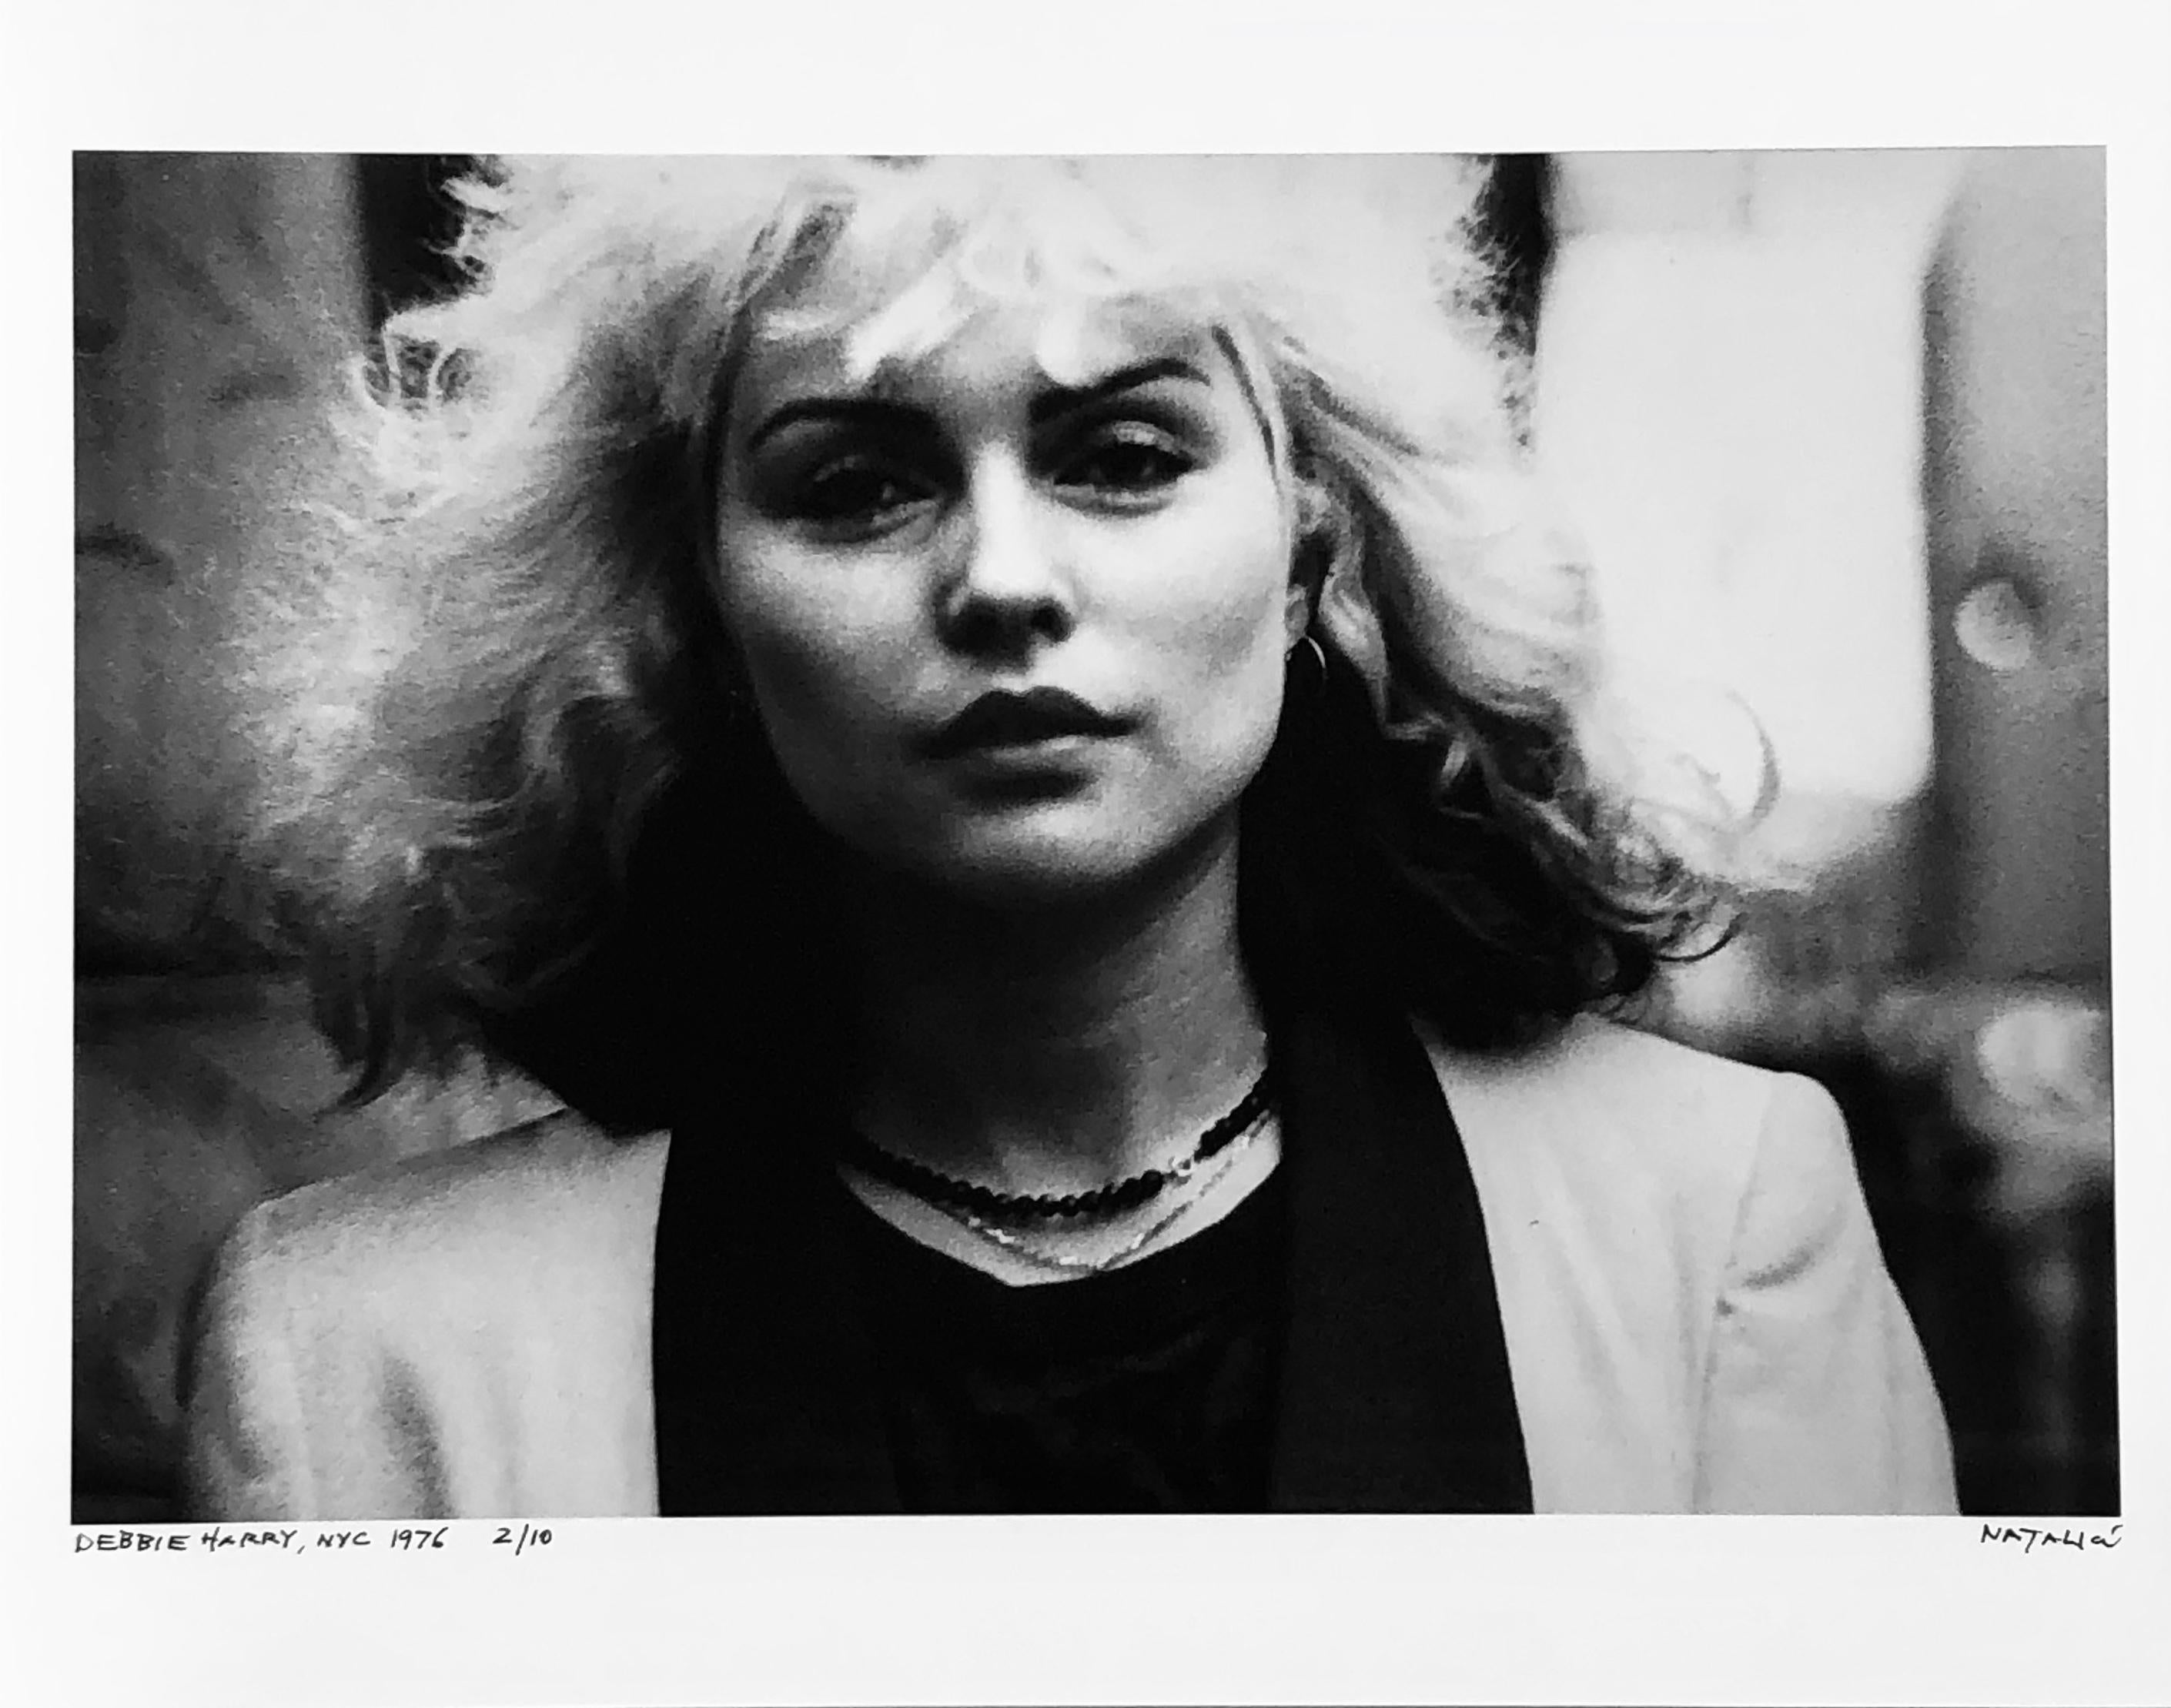 Fernando Natalici Portrait Photograph - Debbie Harry photograph 'The Foreigner' 1977 (Blondie) 